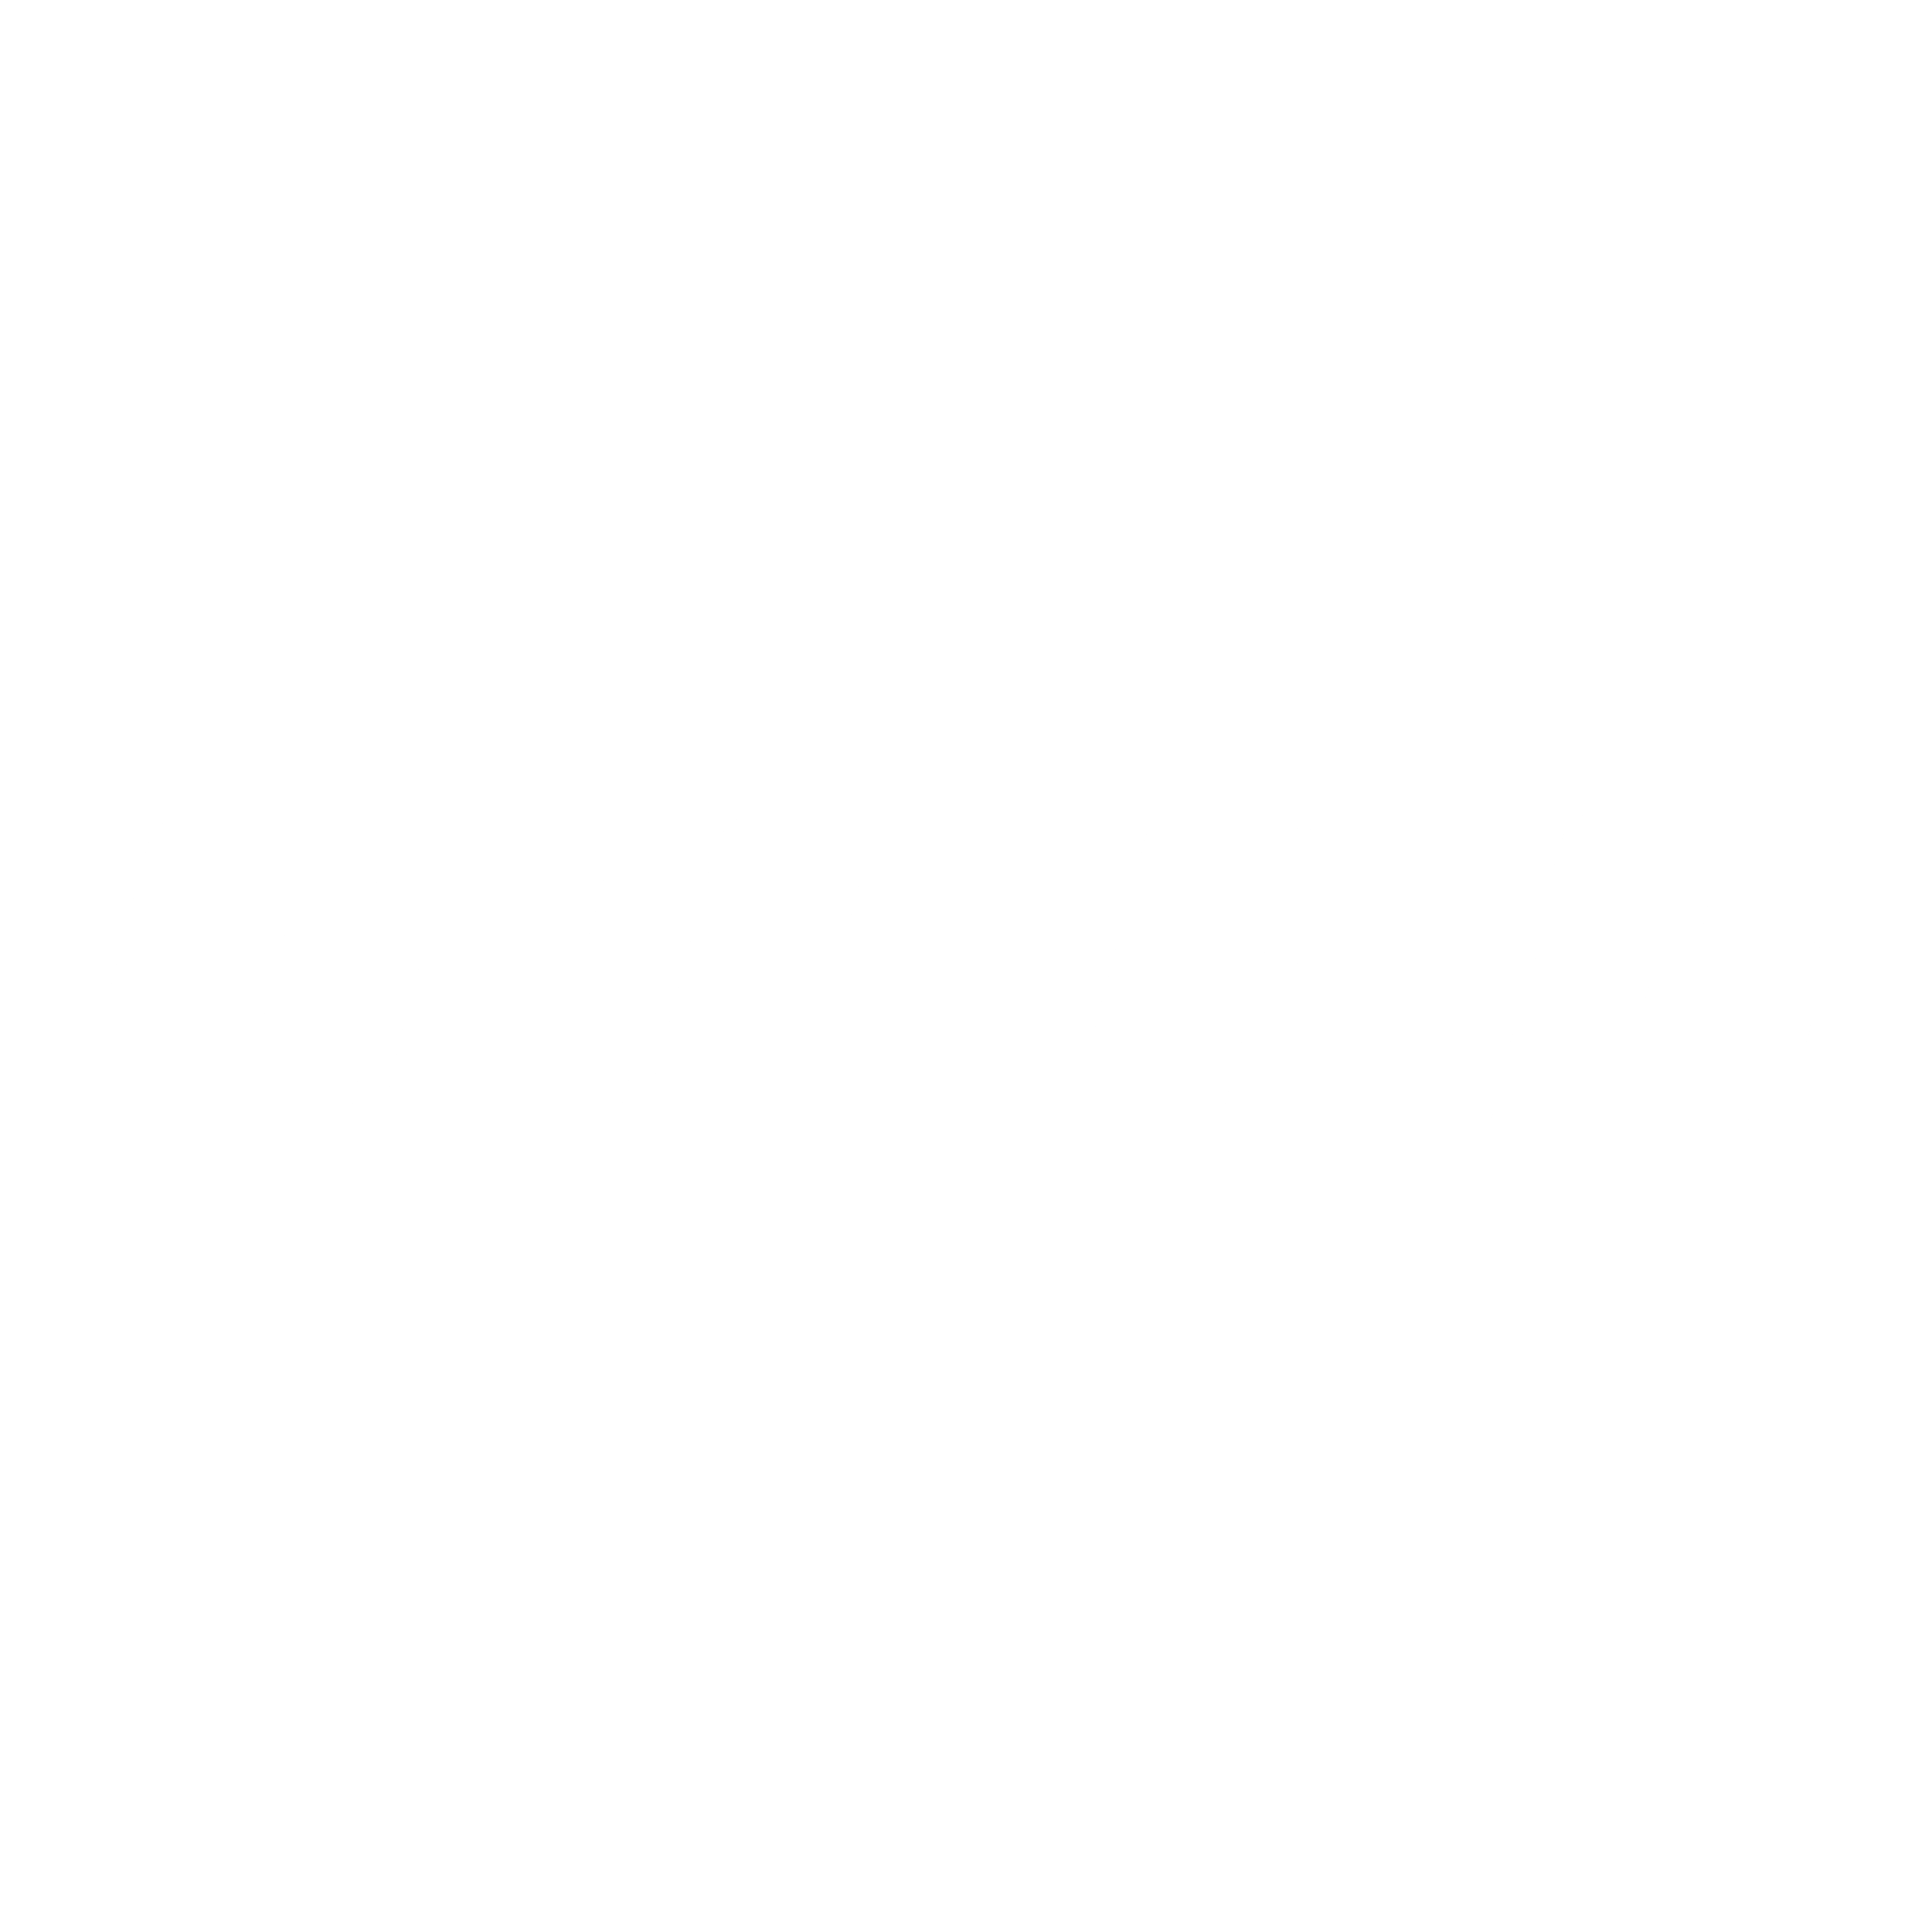 Claas Logo - Claas Logo PNG Transparent & SVG Vector - Freebie Supply